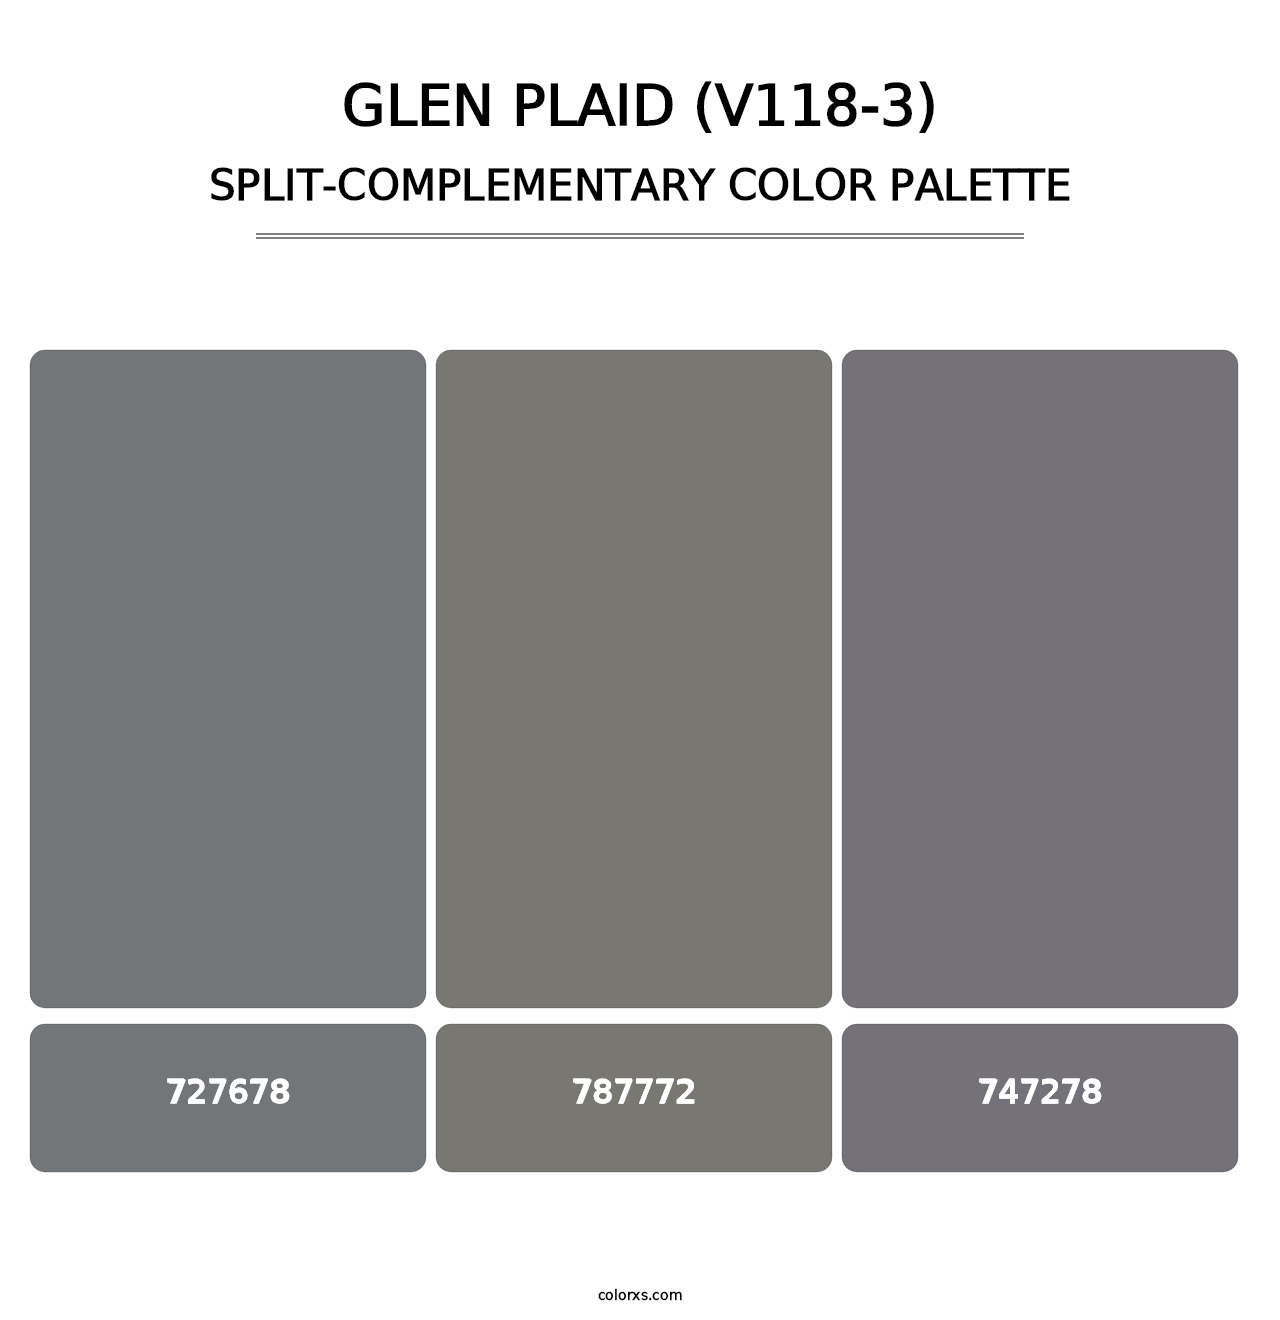 Glen Plaid (V118-3) - Split-Complementary Color Palette